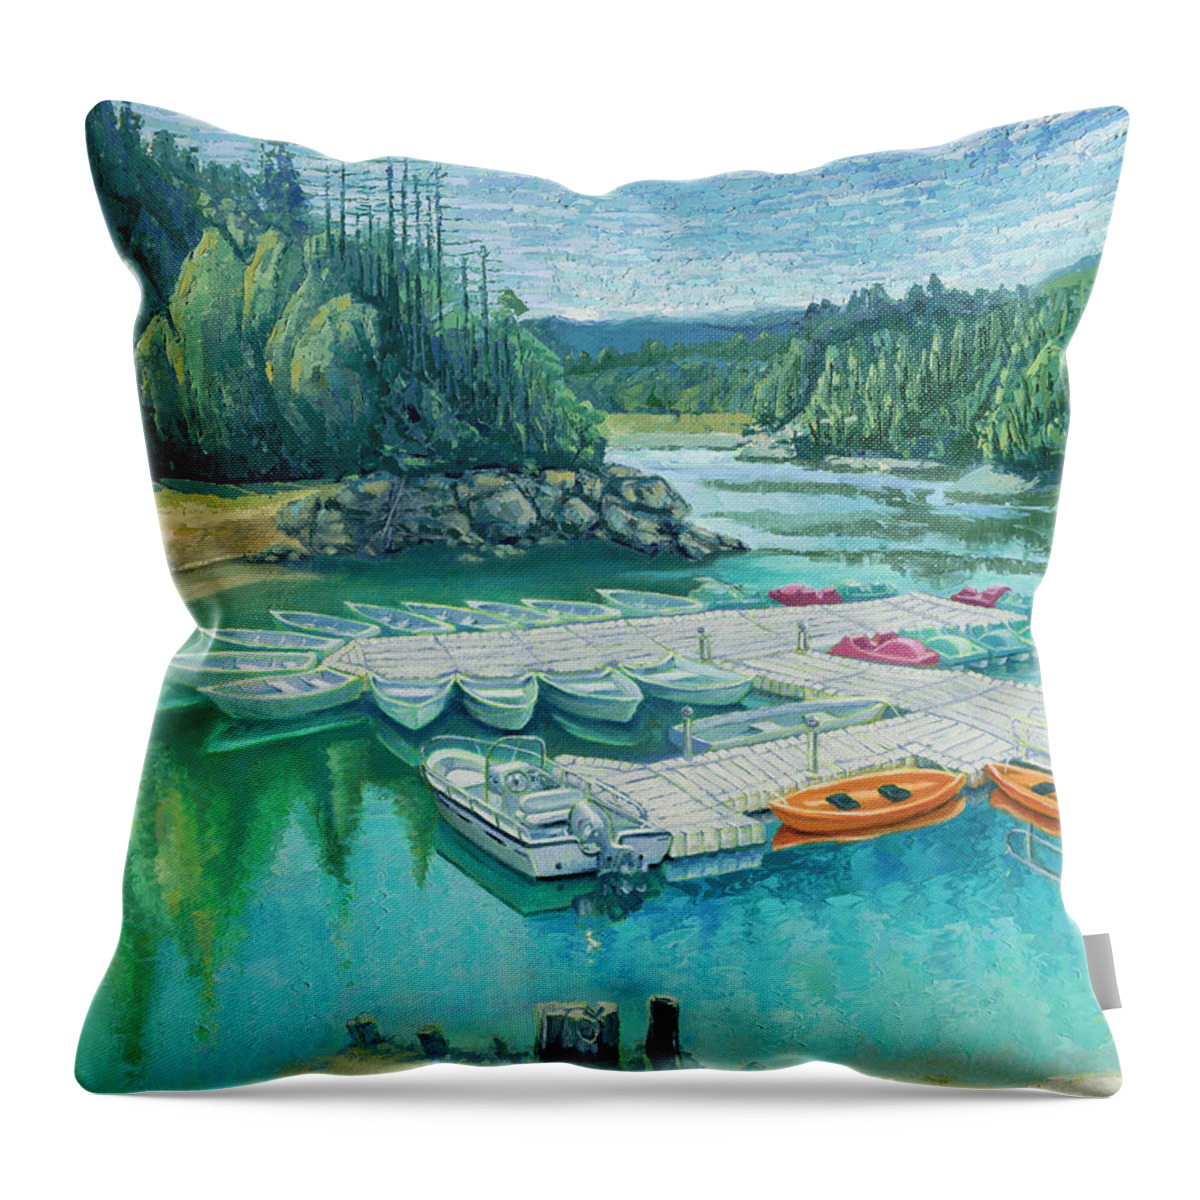 Kayak Throw Pillow featuring the painting Loch Lomond Marina by PJ Kirk